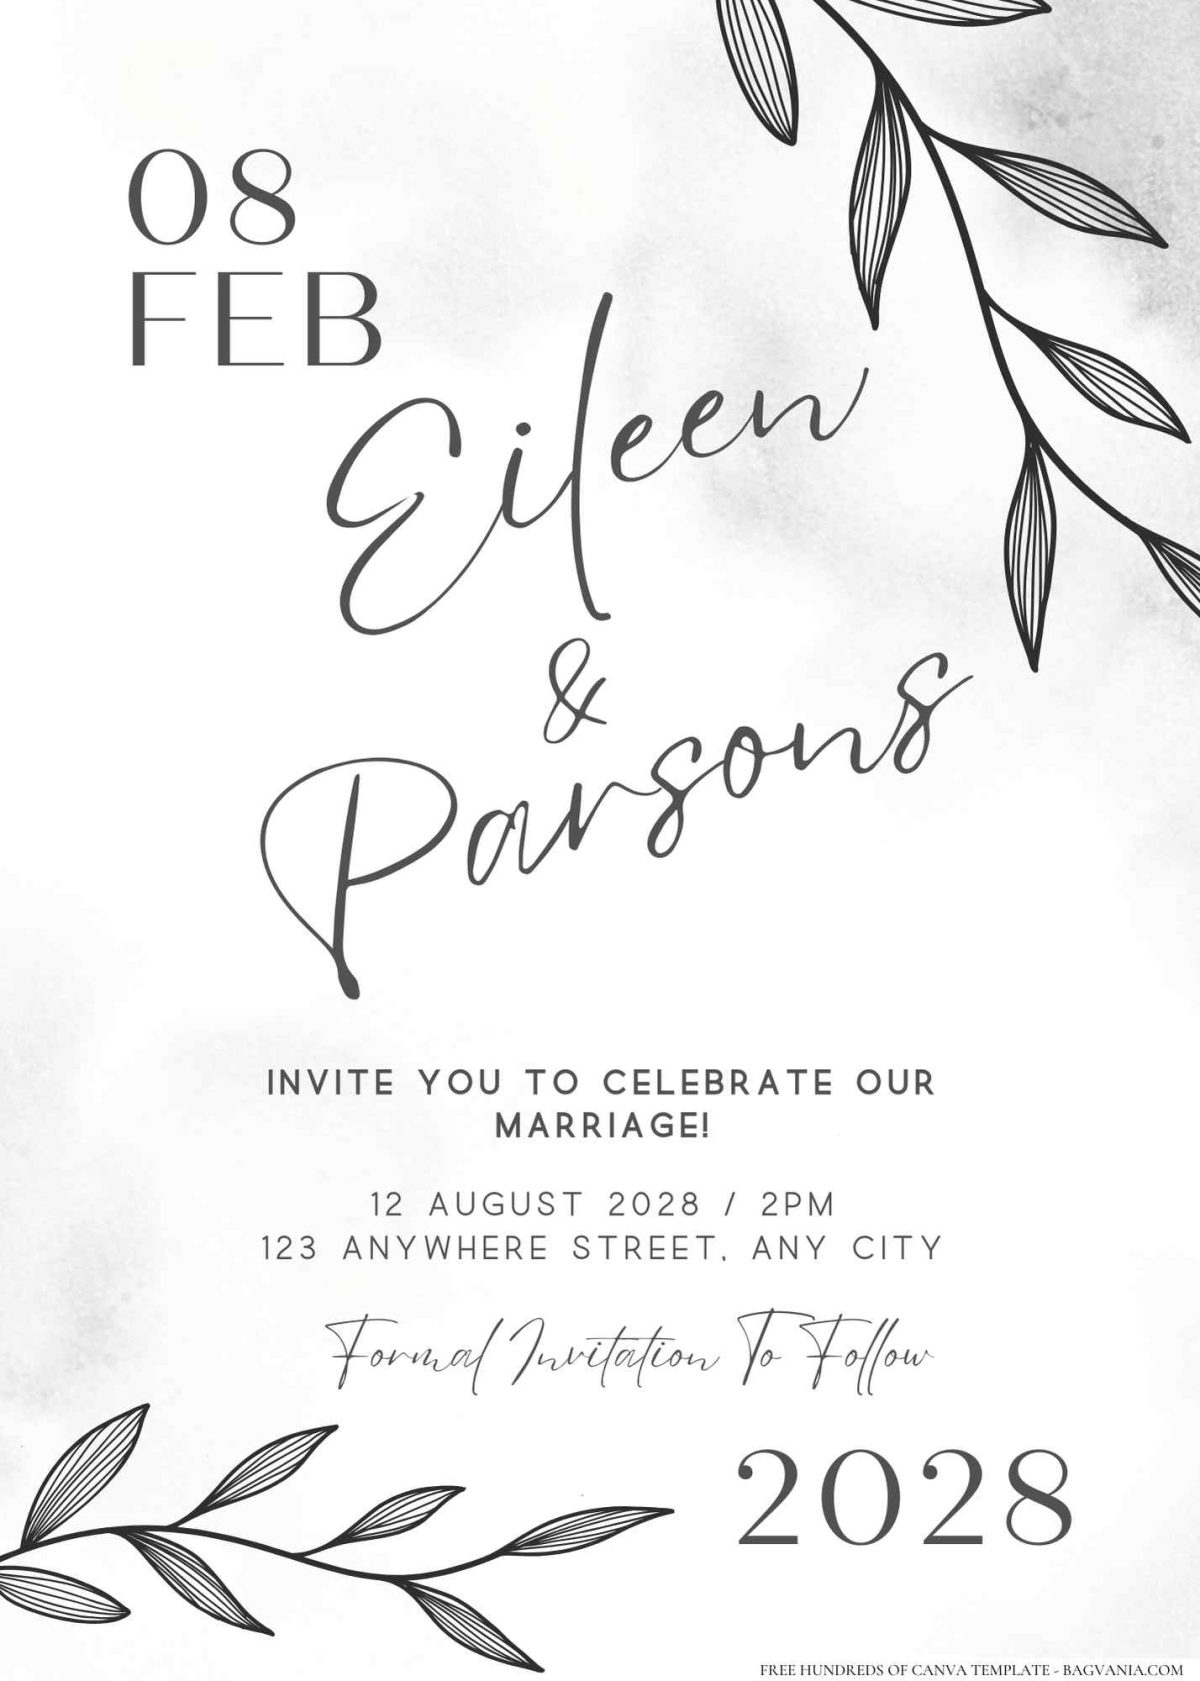 FREE Editable Monochromatic black and white floral prints wedding invitation